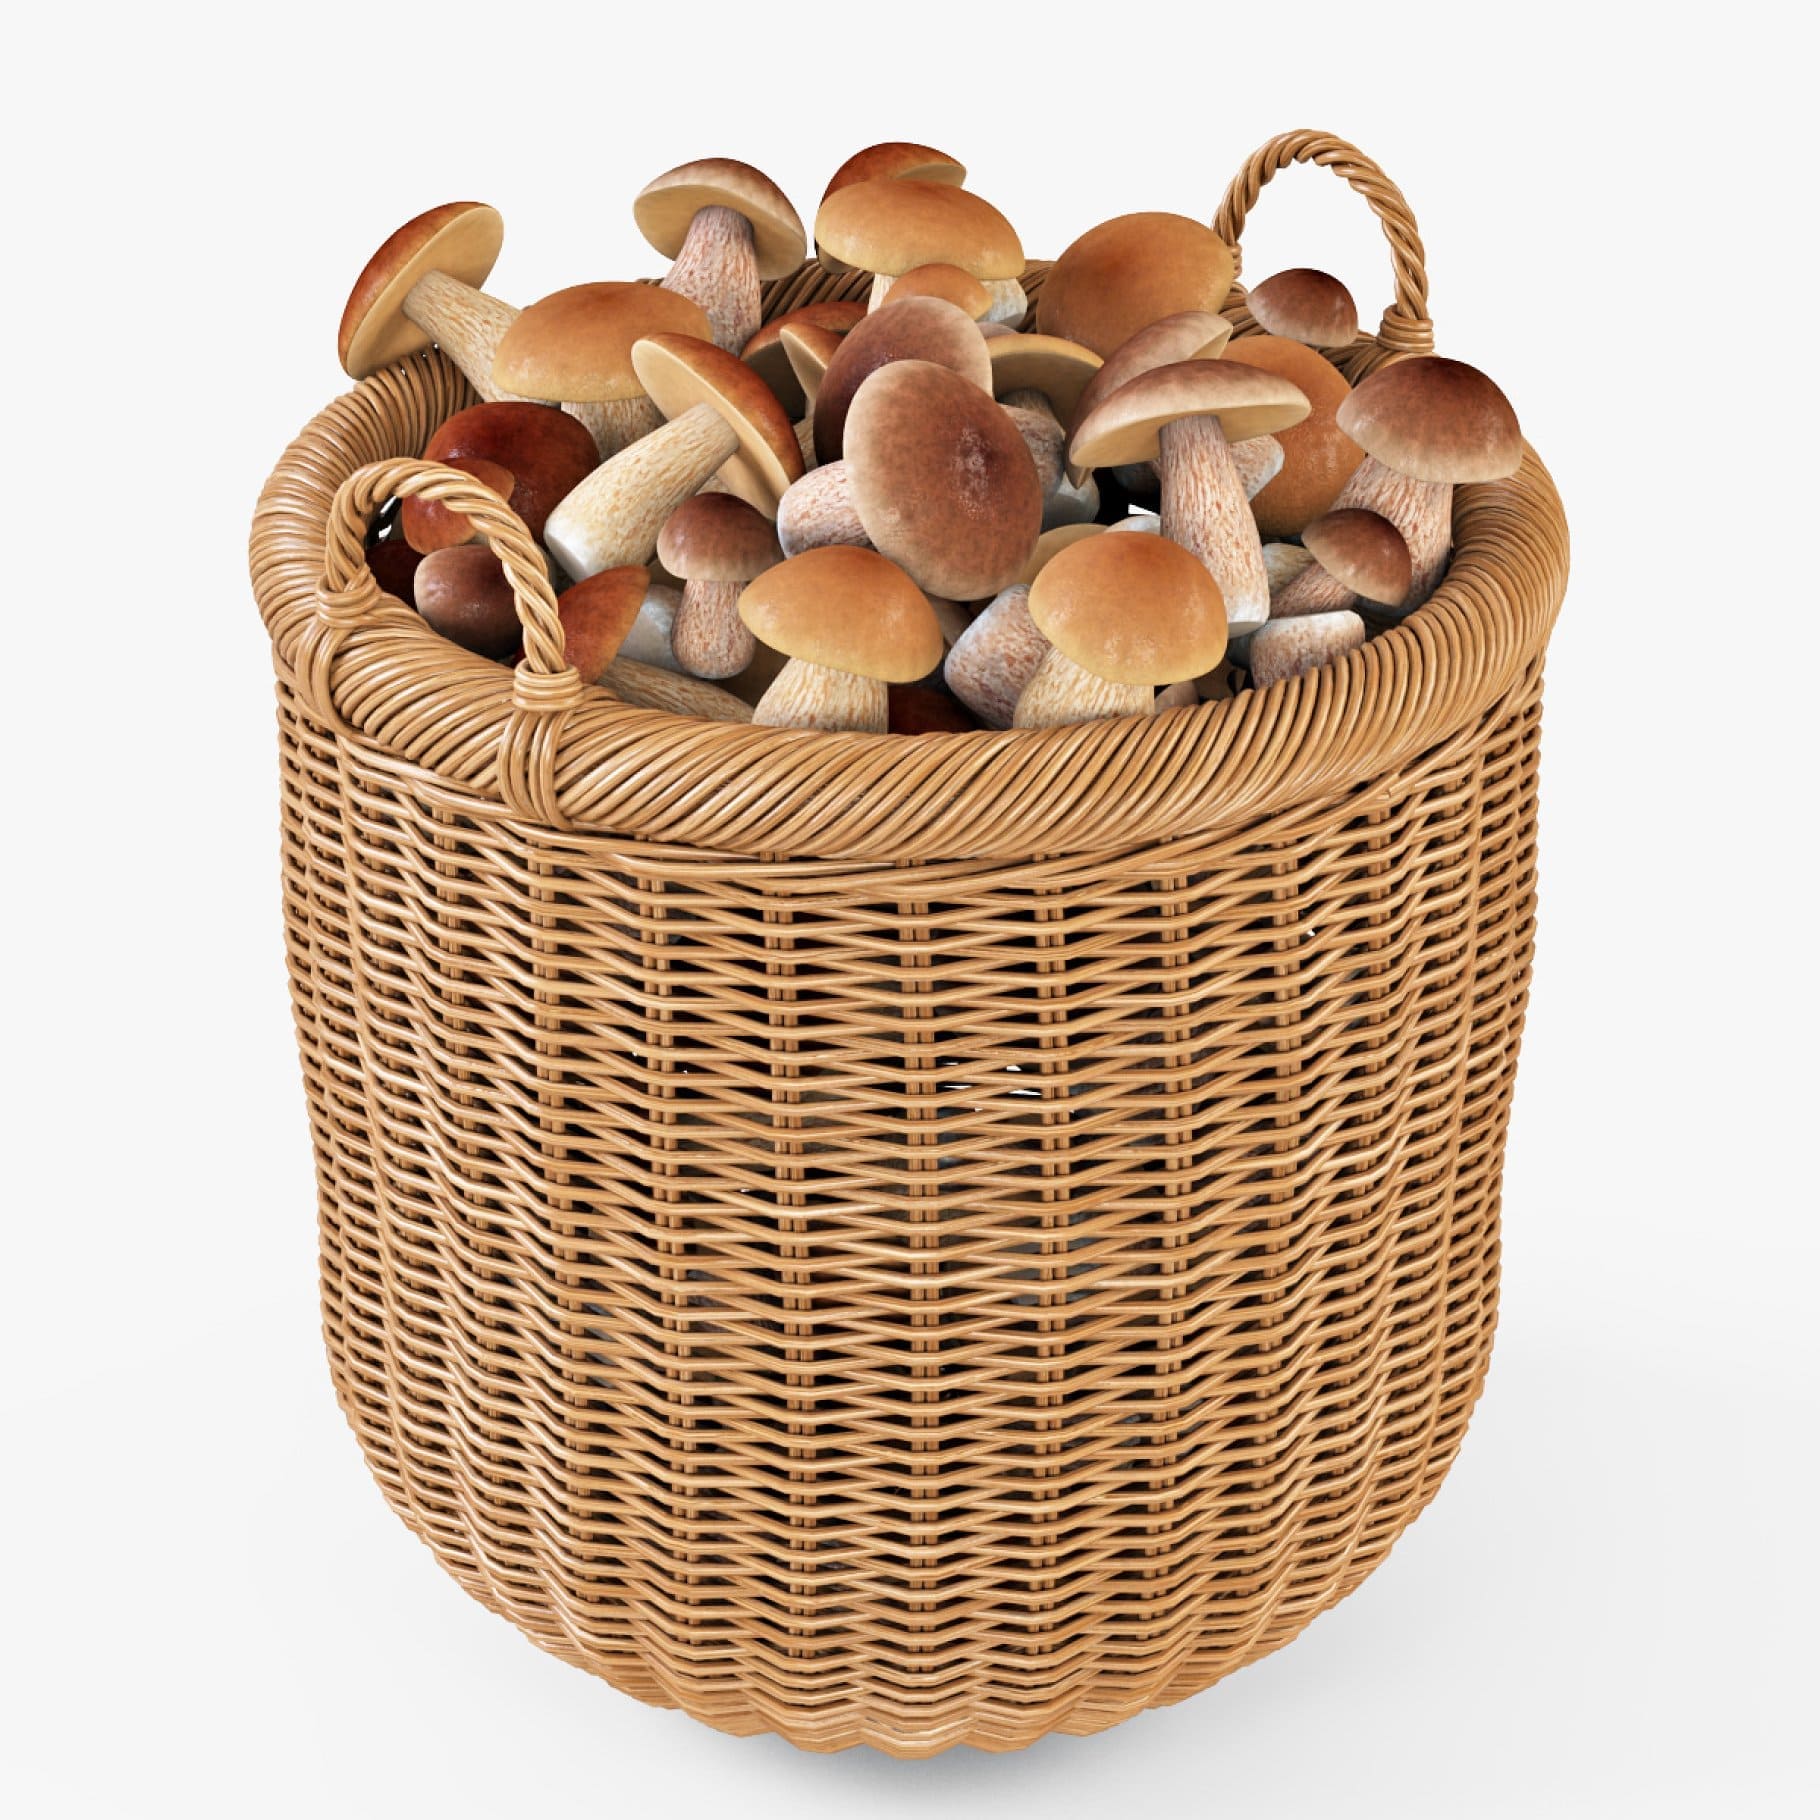 A perfectly woven mushroom basket.